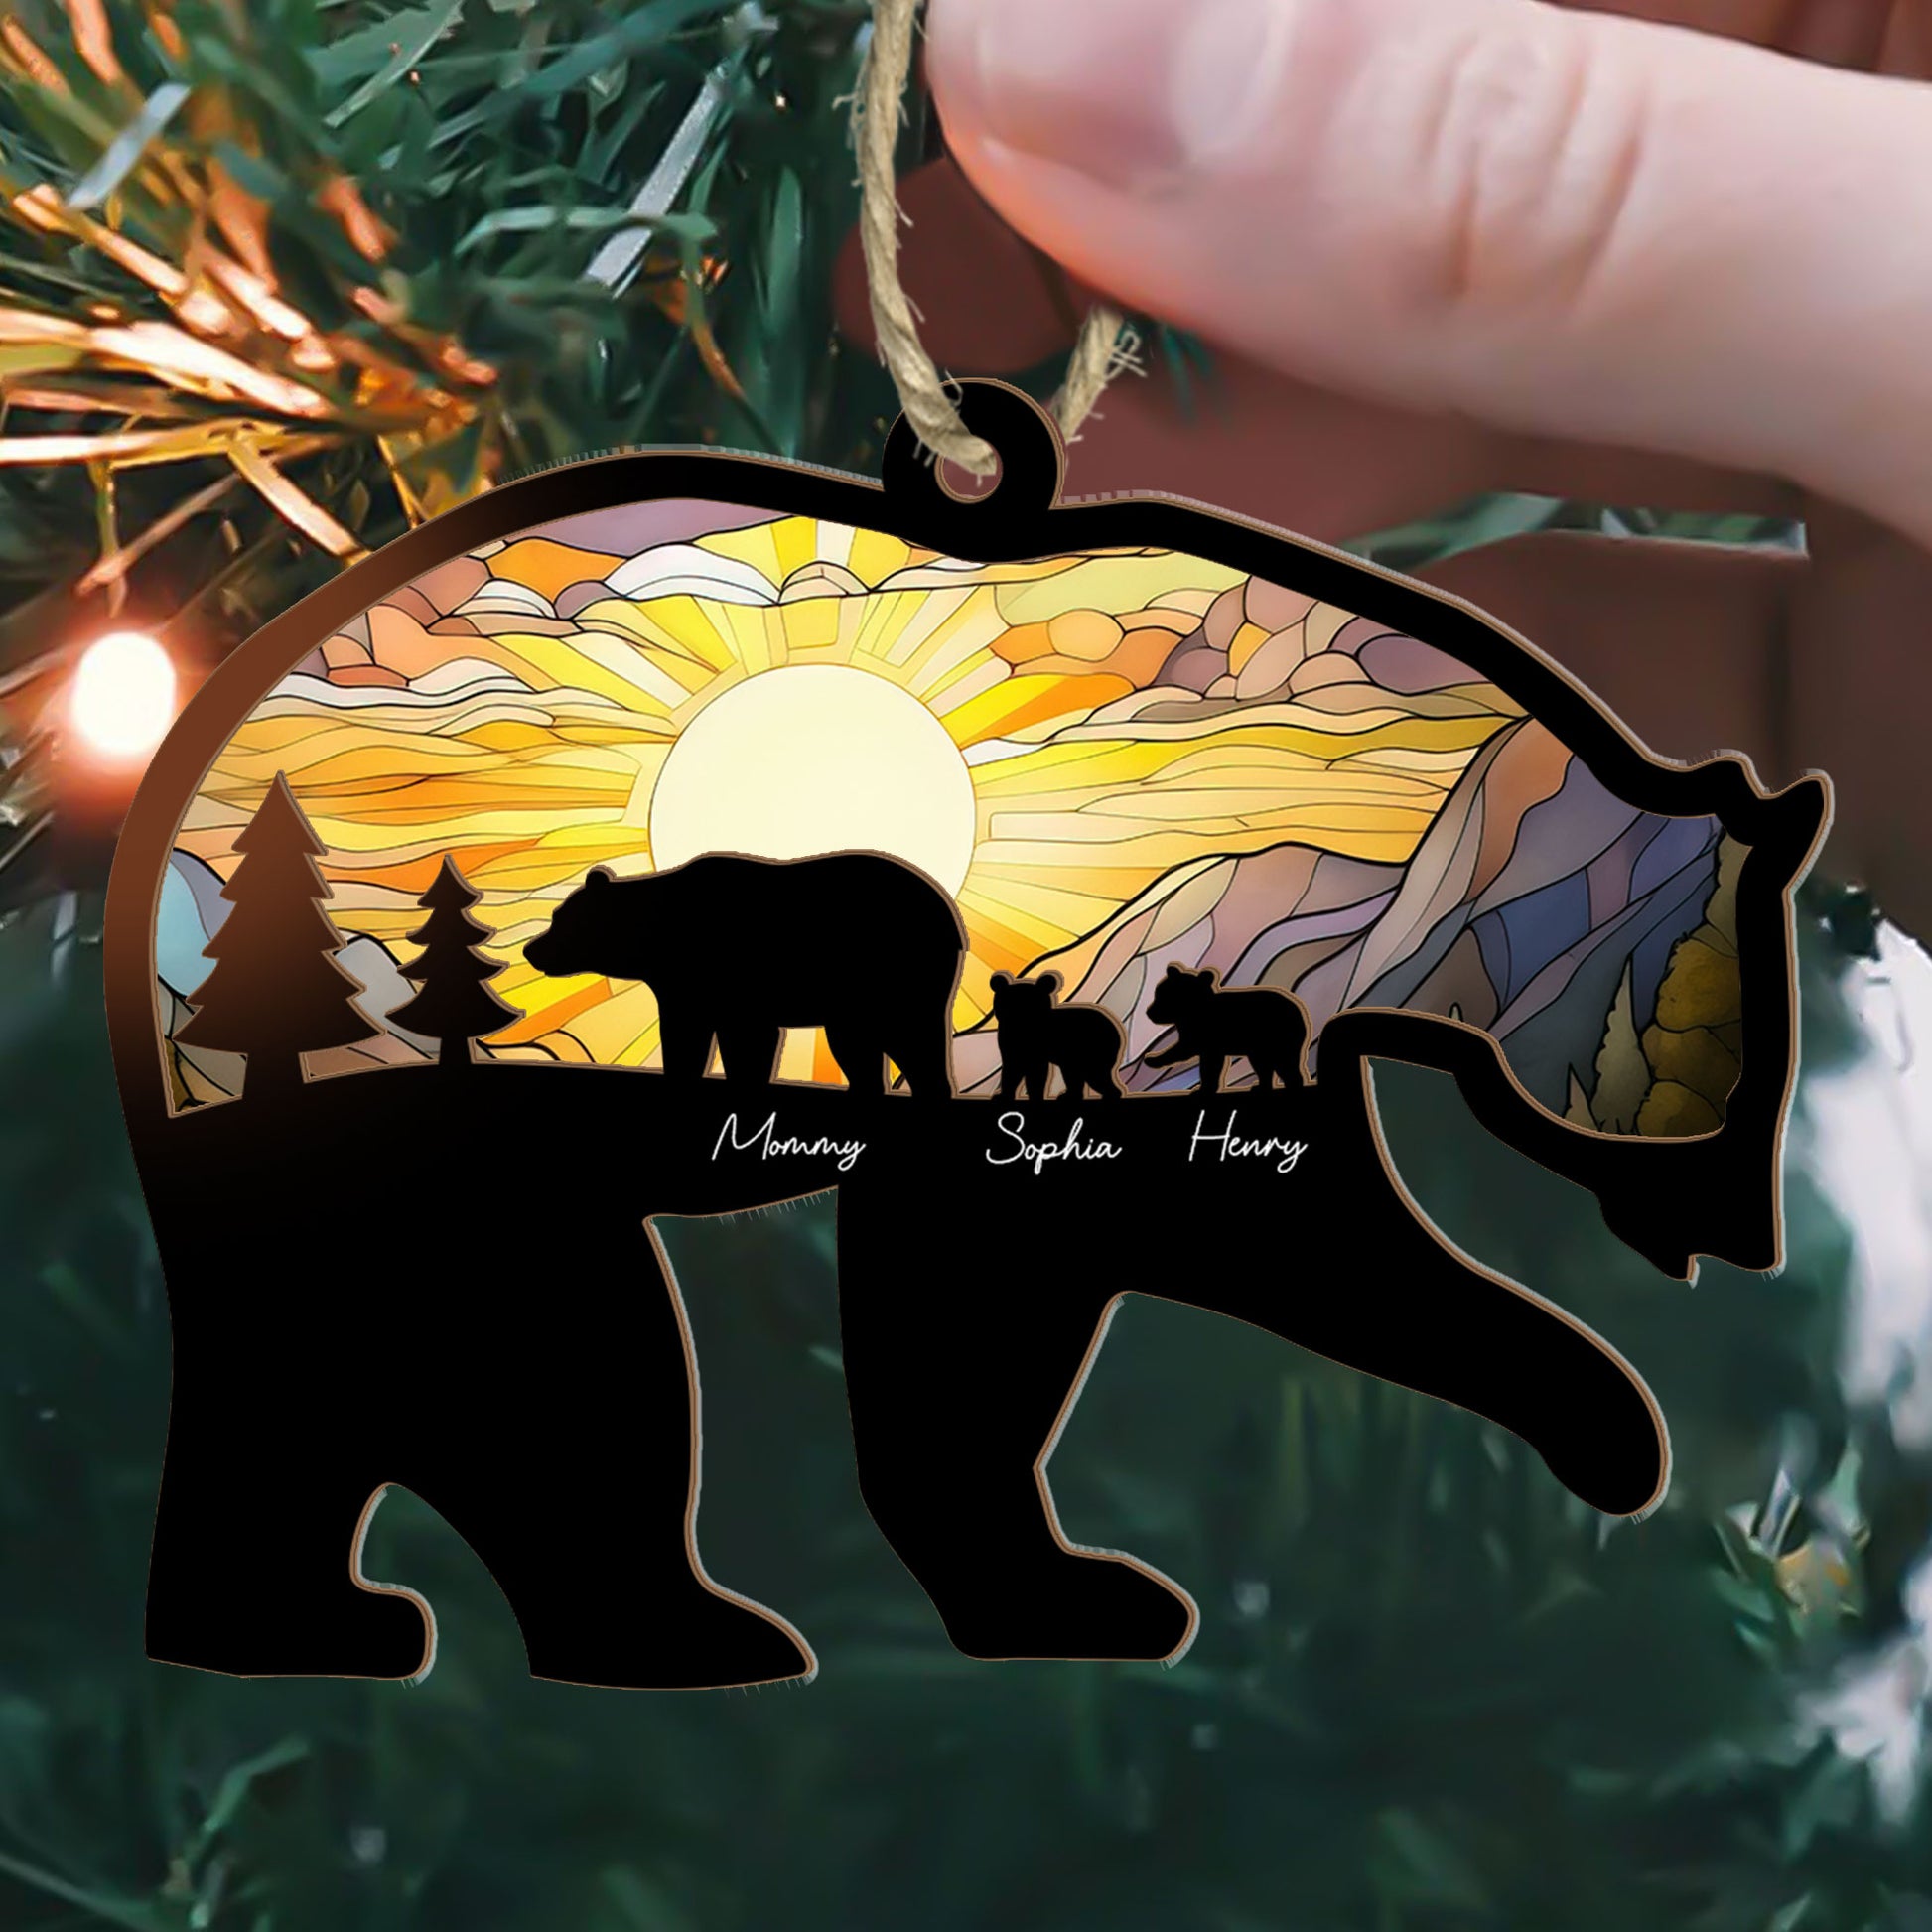 Mama Bear - Personalized Suncatcher Ornament – Macorner